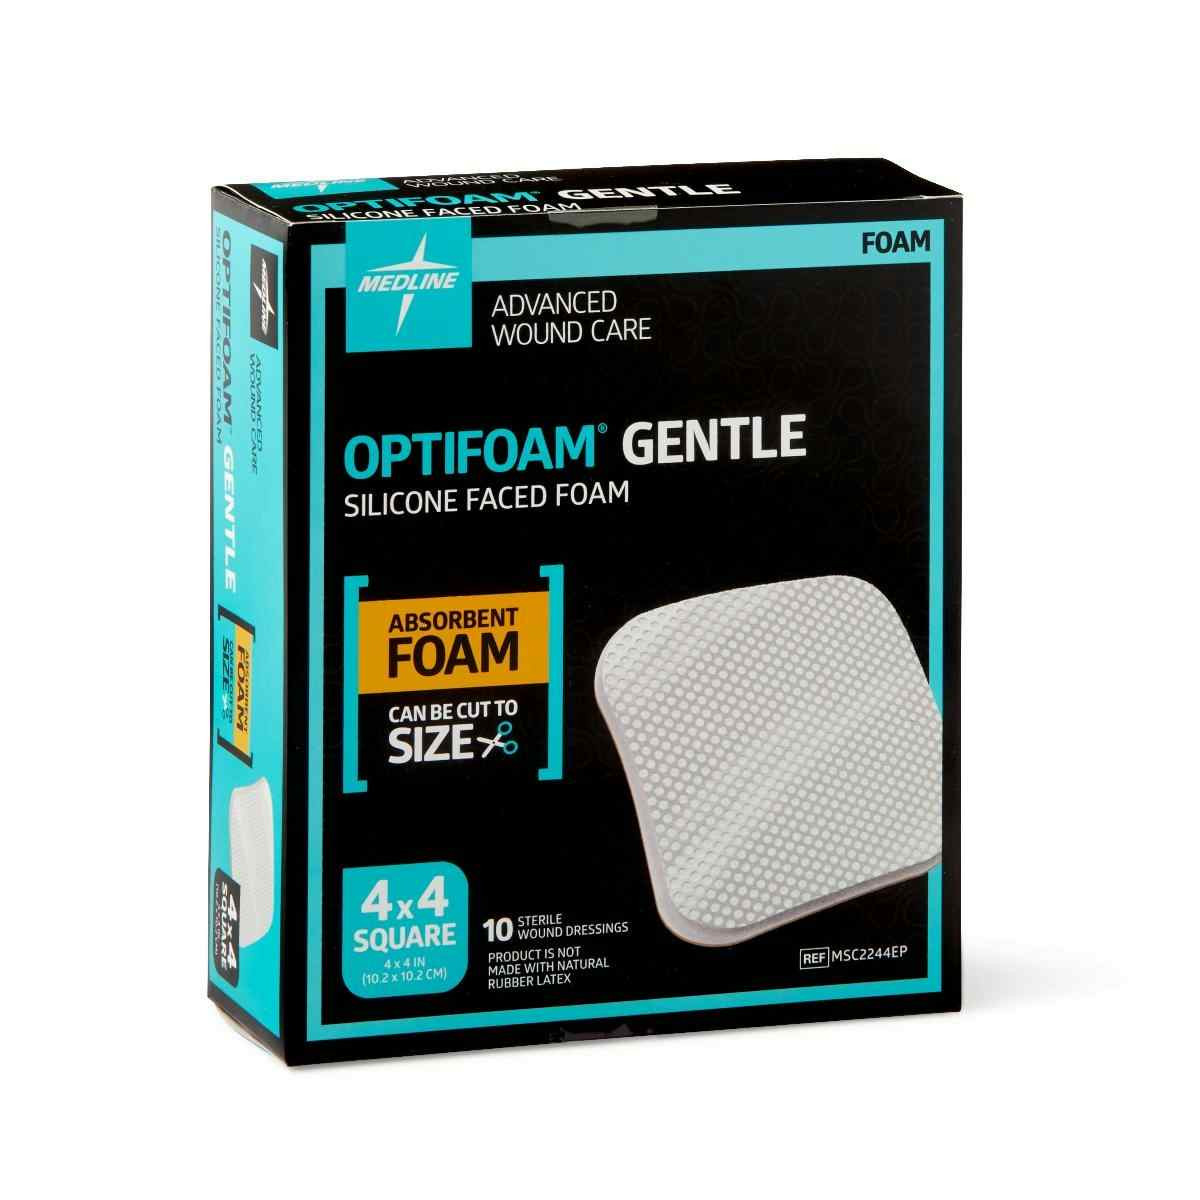 Medline Optifoam Gentle Silicone Faced Foam Dressing